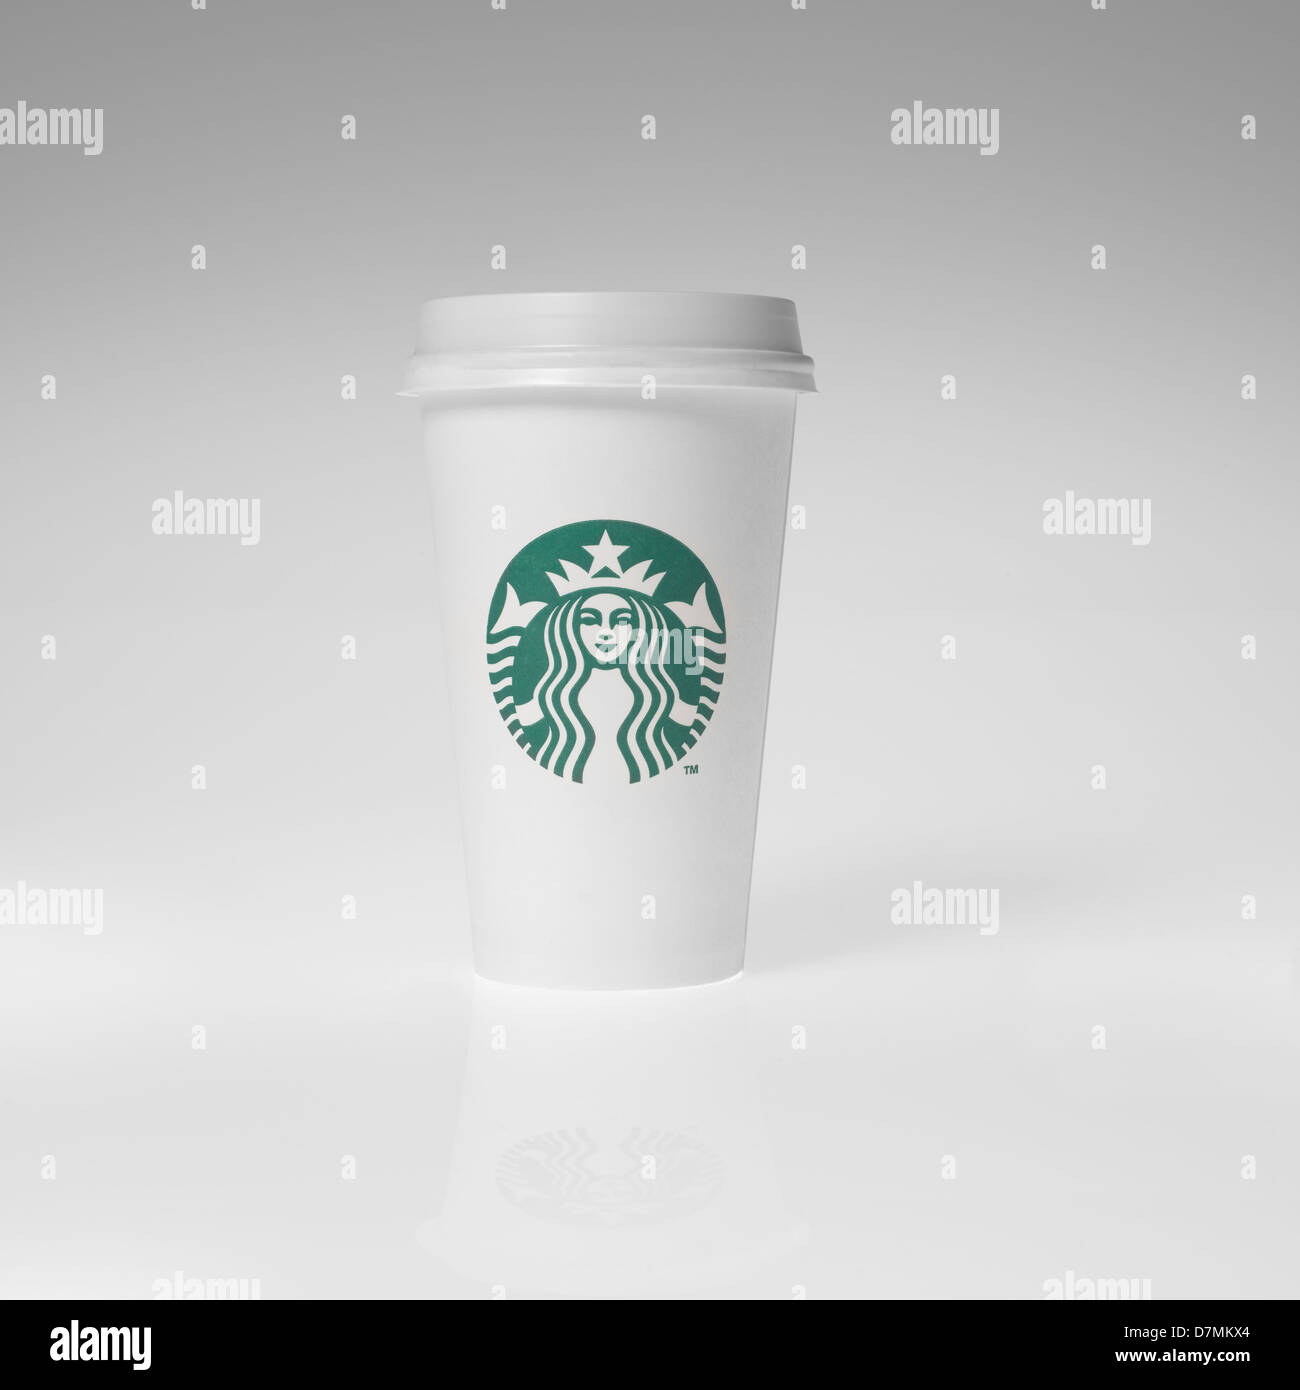 Starbucks take away cup on white background Stock Photo